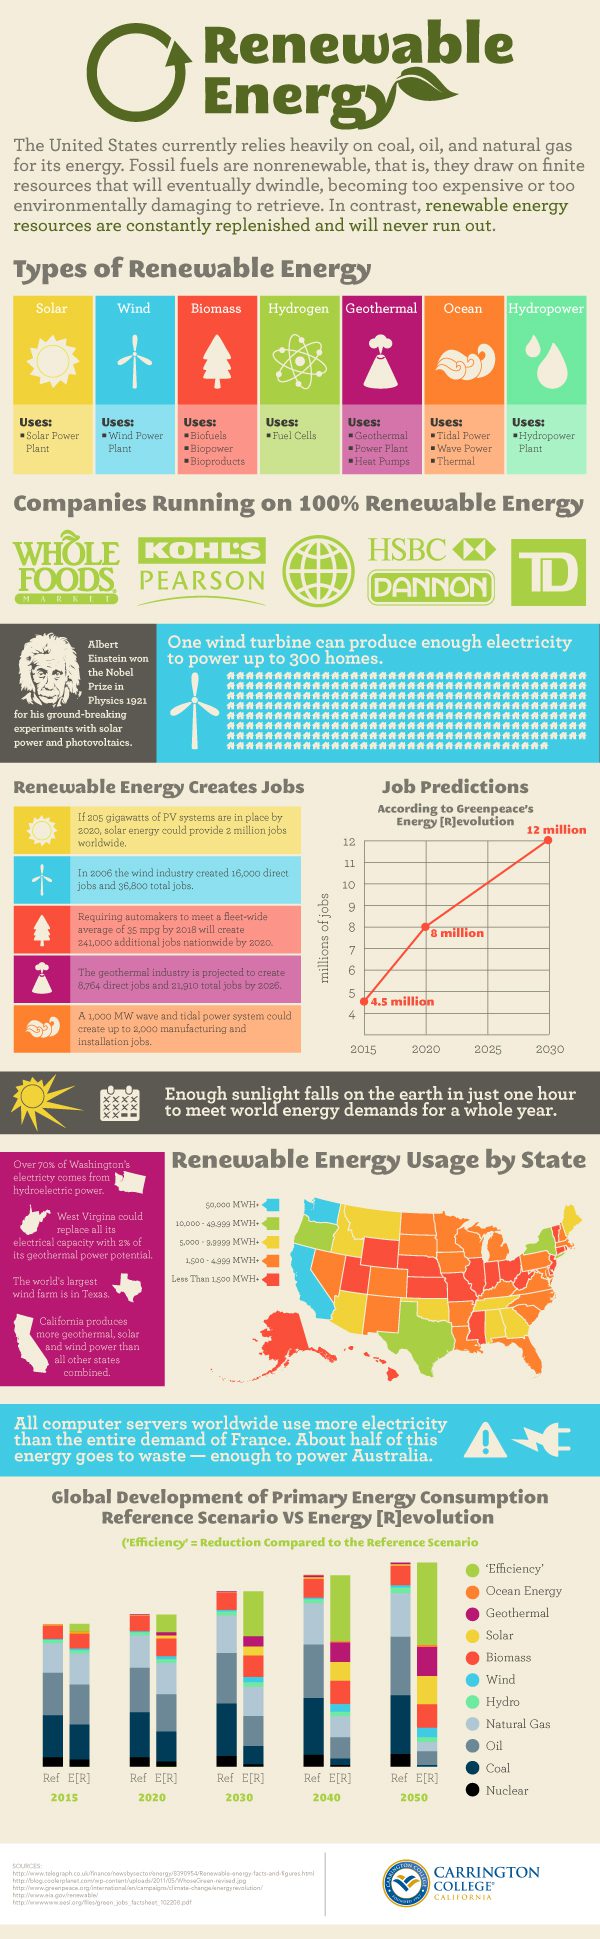 Types of Renewable Energies Explained